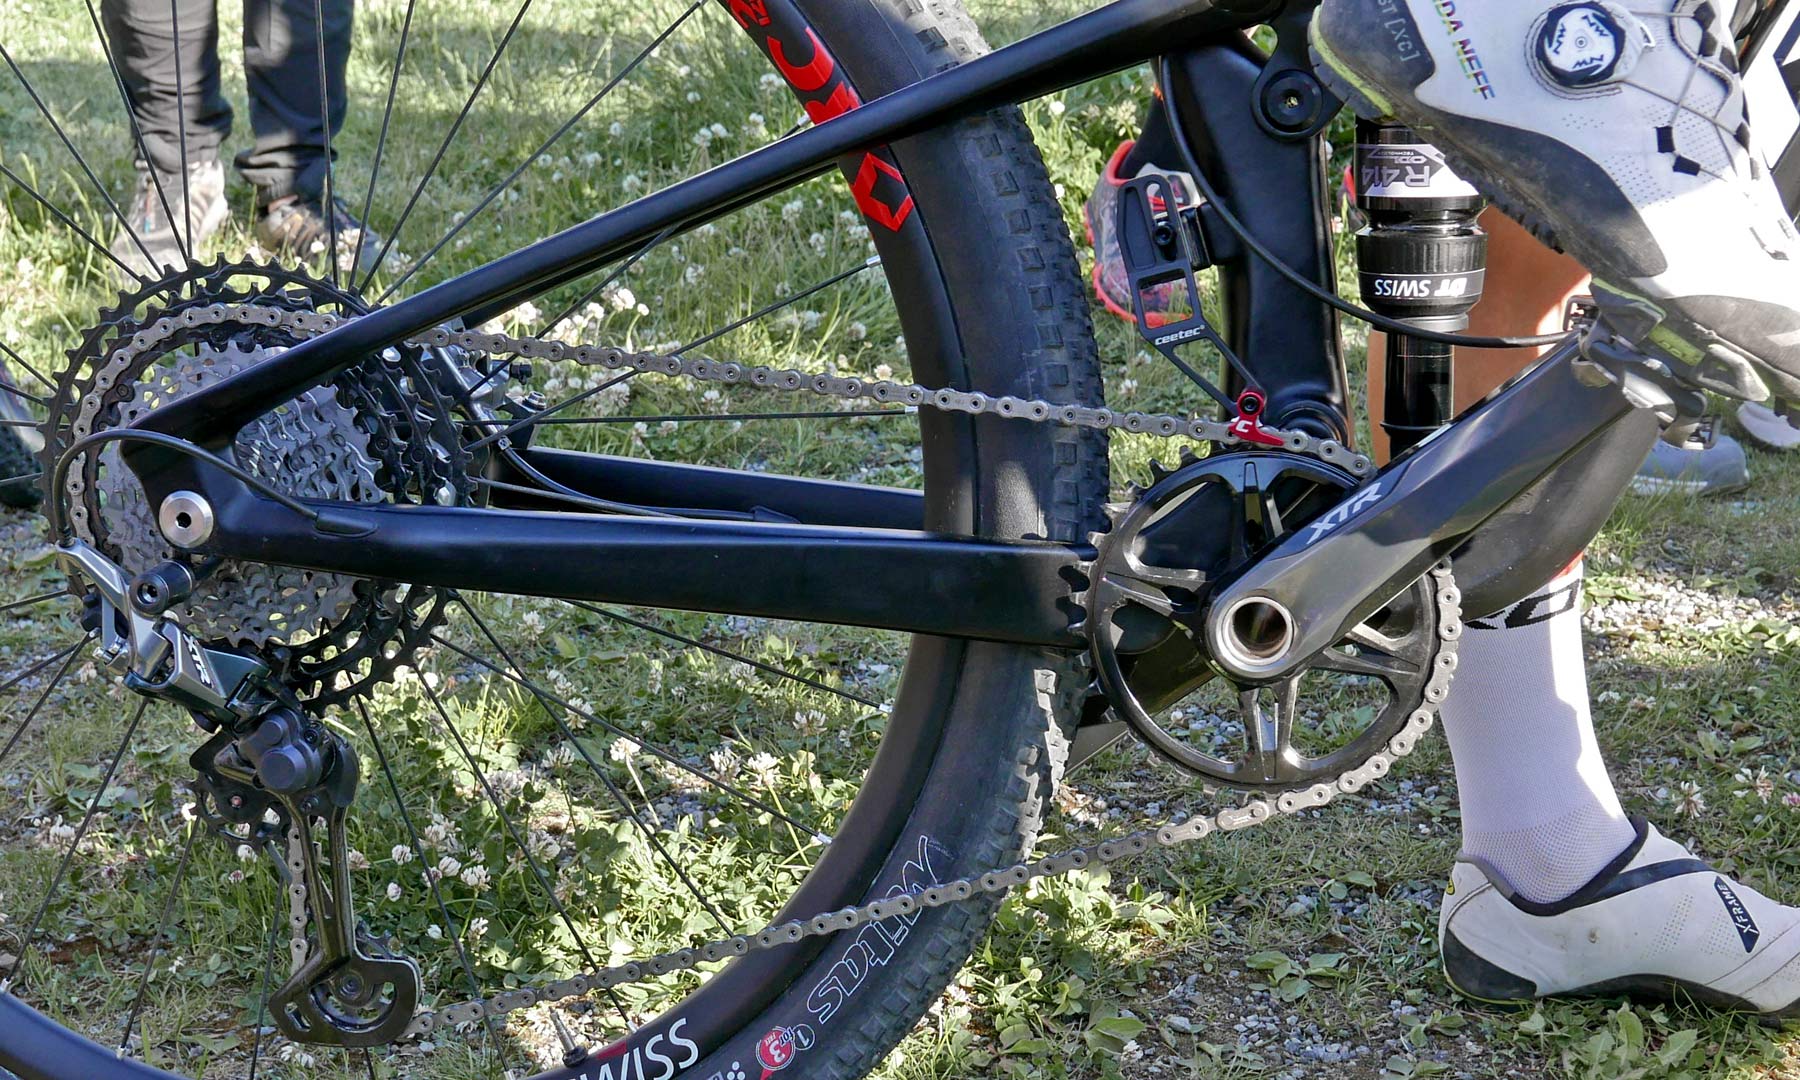 Prototype Kross Earth 100mm made in EU carbon full suspension 29er XC race mountain bike Jolanda Neff new XTR M9100 drivetrain